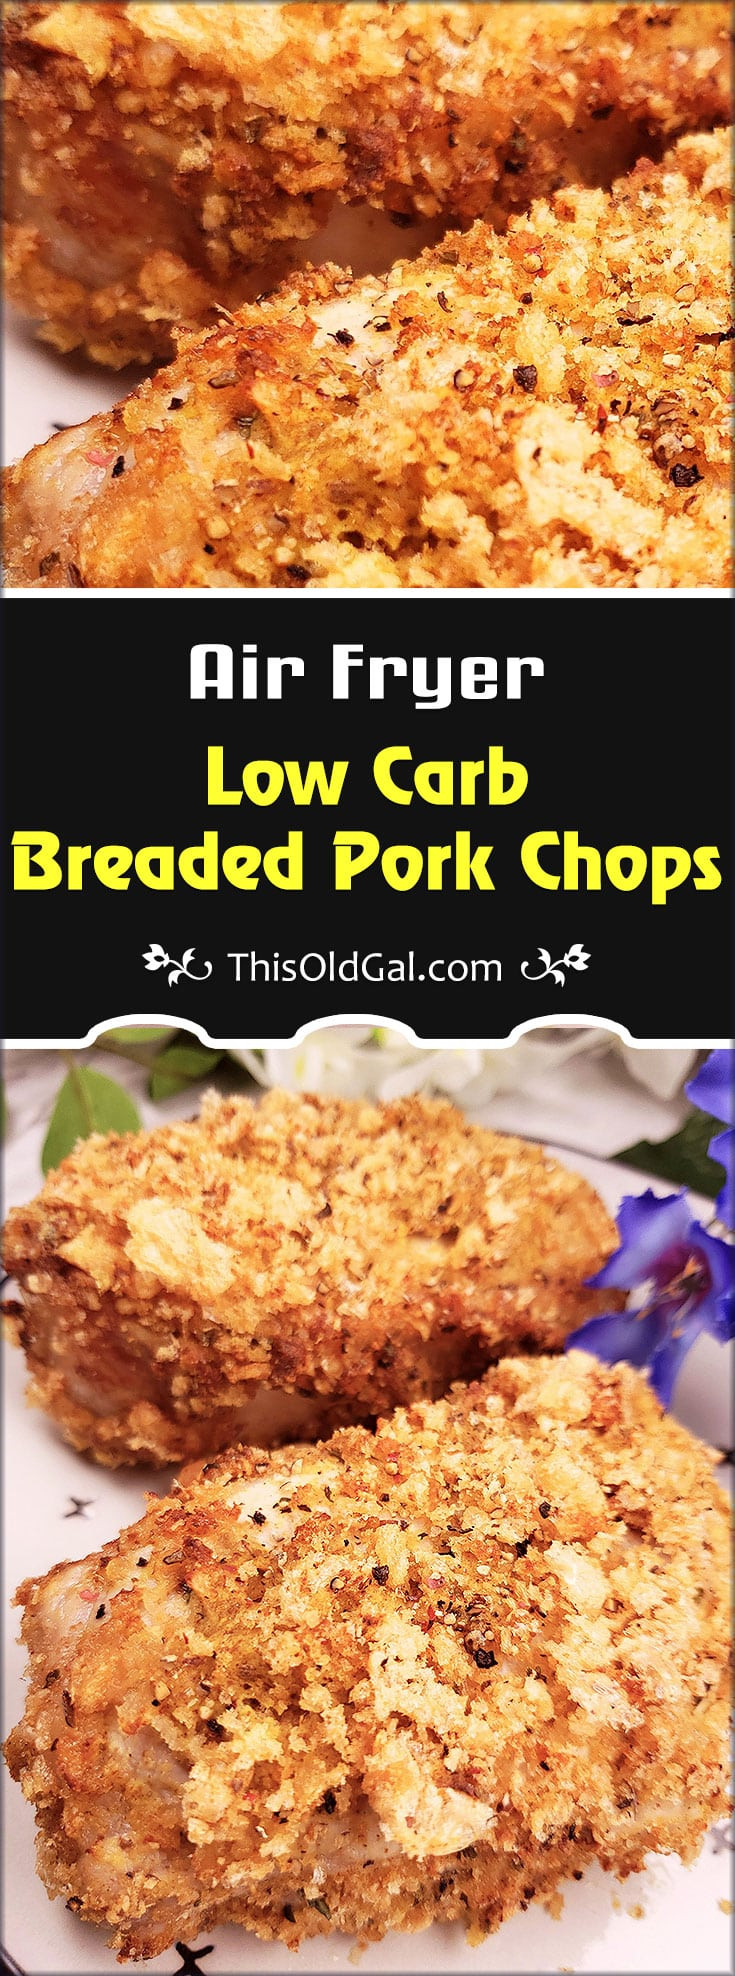 Air Fryer Keto Recipes Pork Chops
 Low Carb Breaded Pork Chops in the Air Fryer